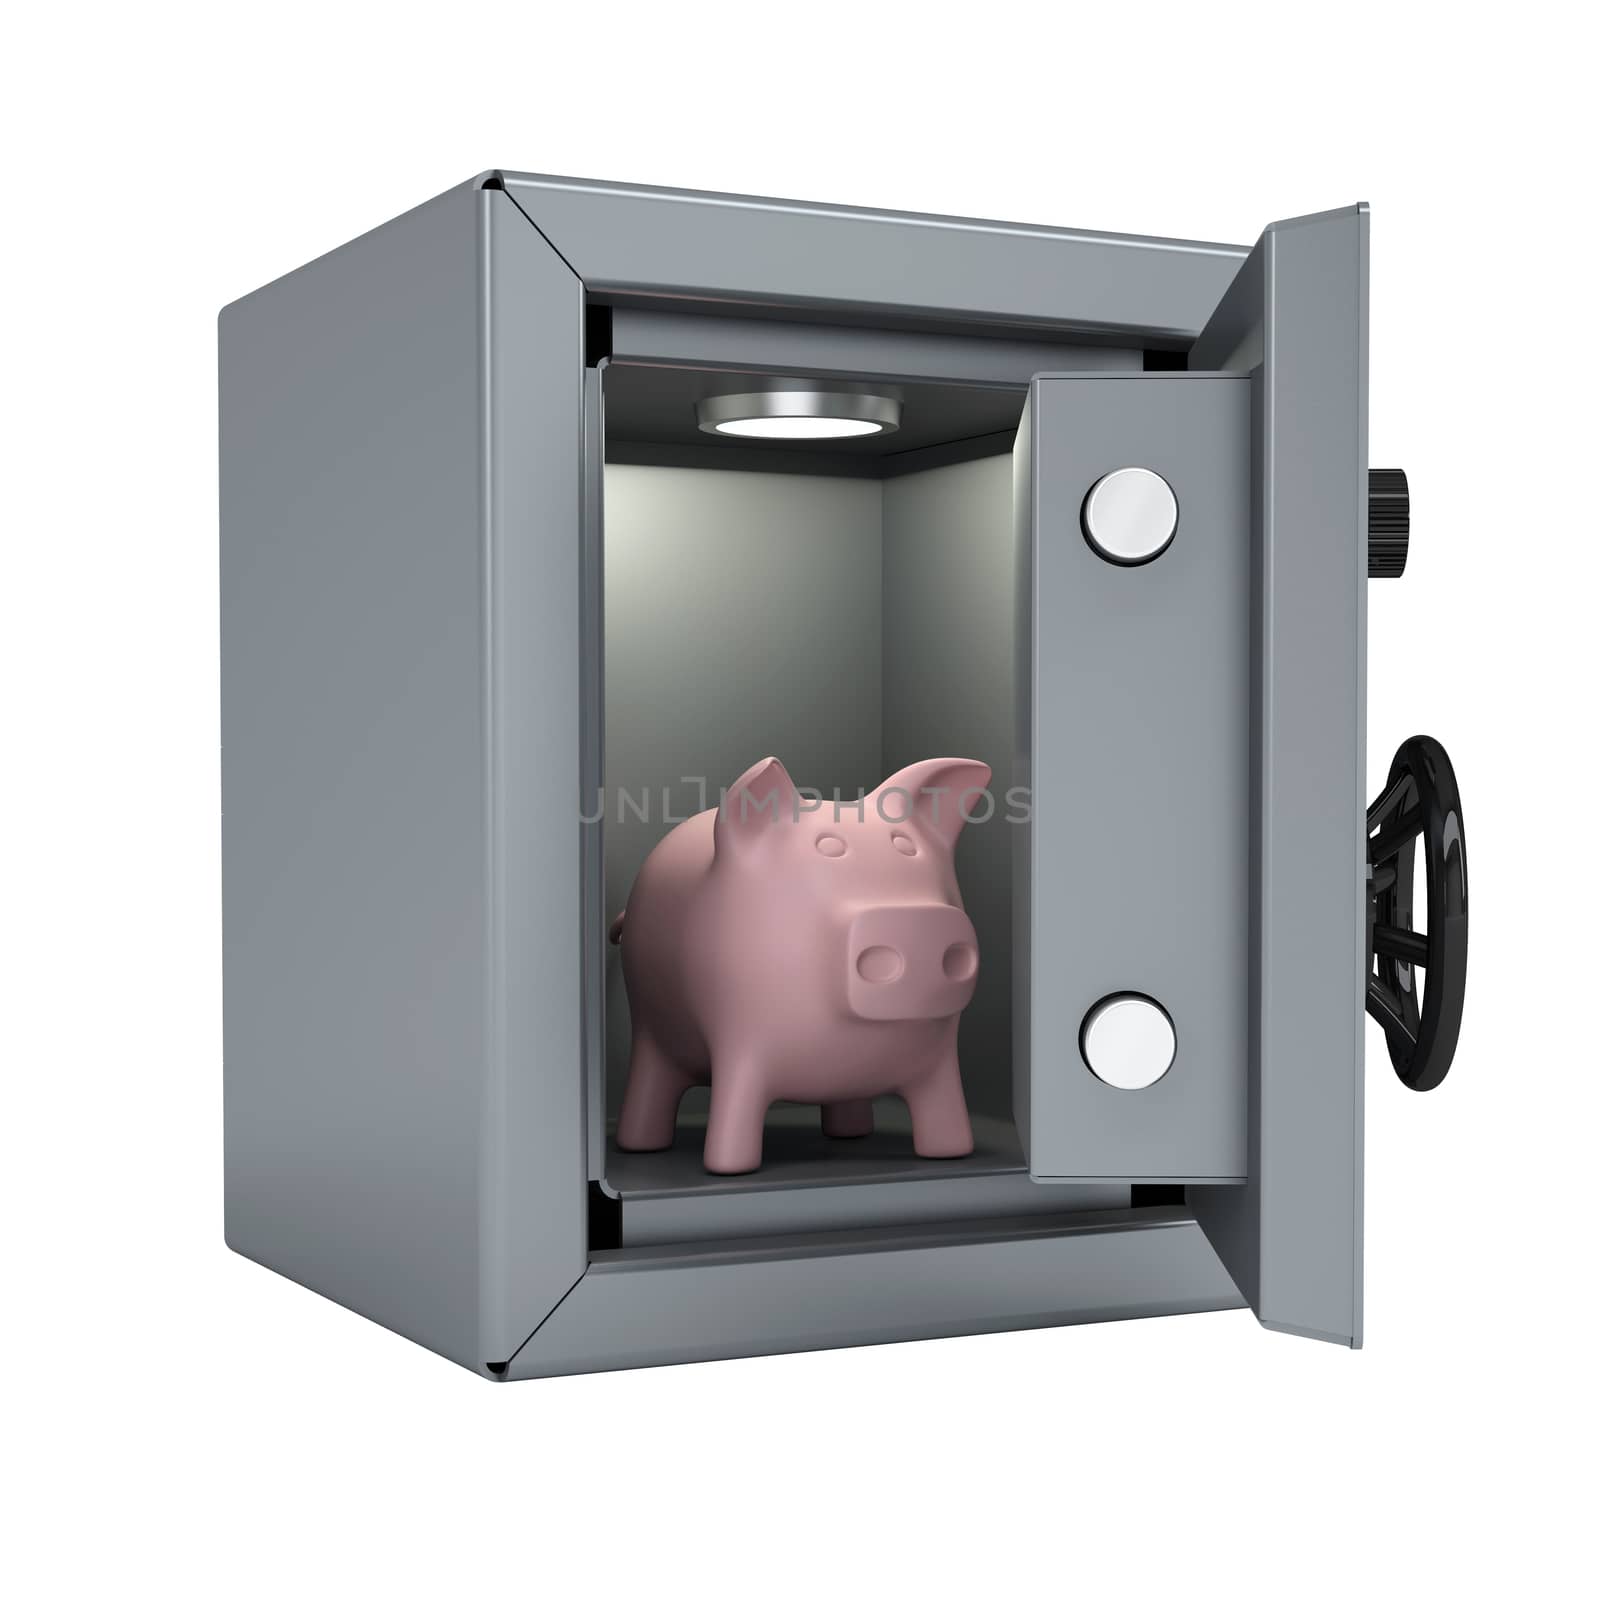 Piggy bank in an open metal safe by cherezoff